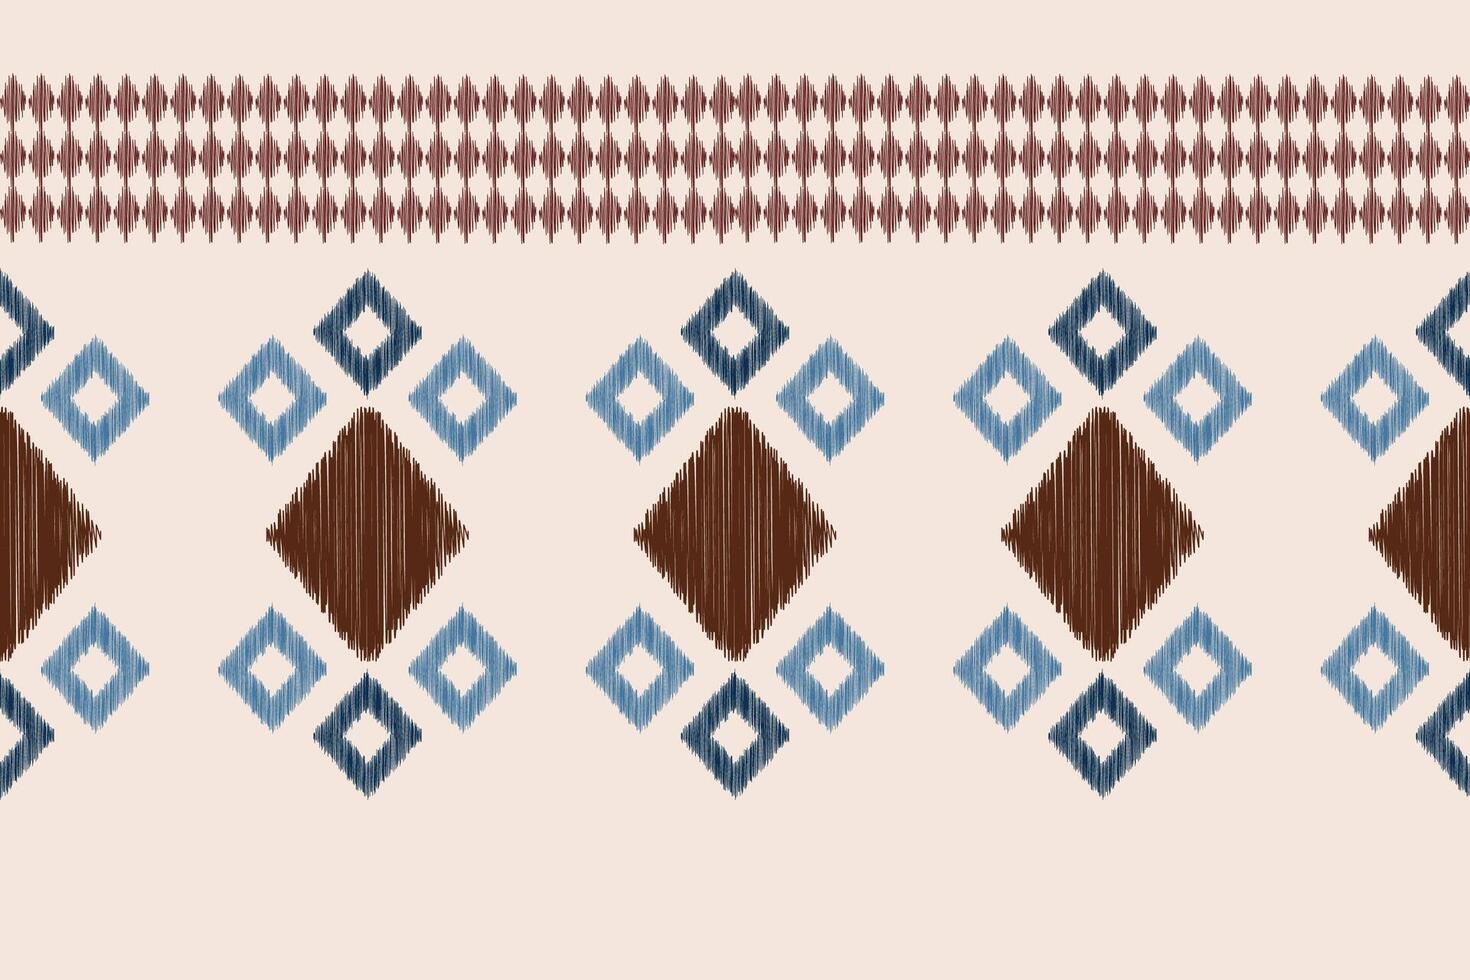 etnisk ikat tyg mönster geometrisk stil.afrikansk ikat broderi etnisk orientalisk mönster brun grädde bakgrund. abstrakt, vektor, illustration.textur, kläder, ram, dekoration, motiv, matta. vektor